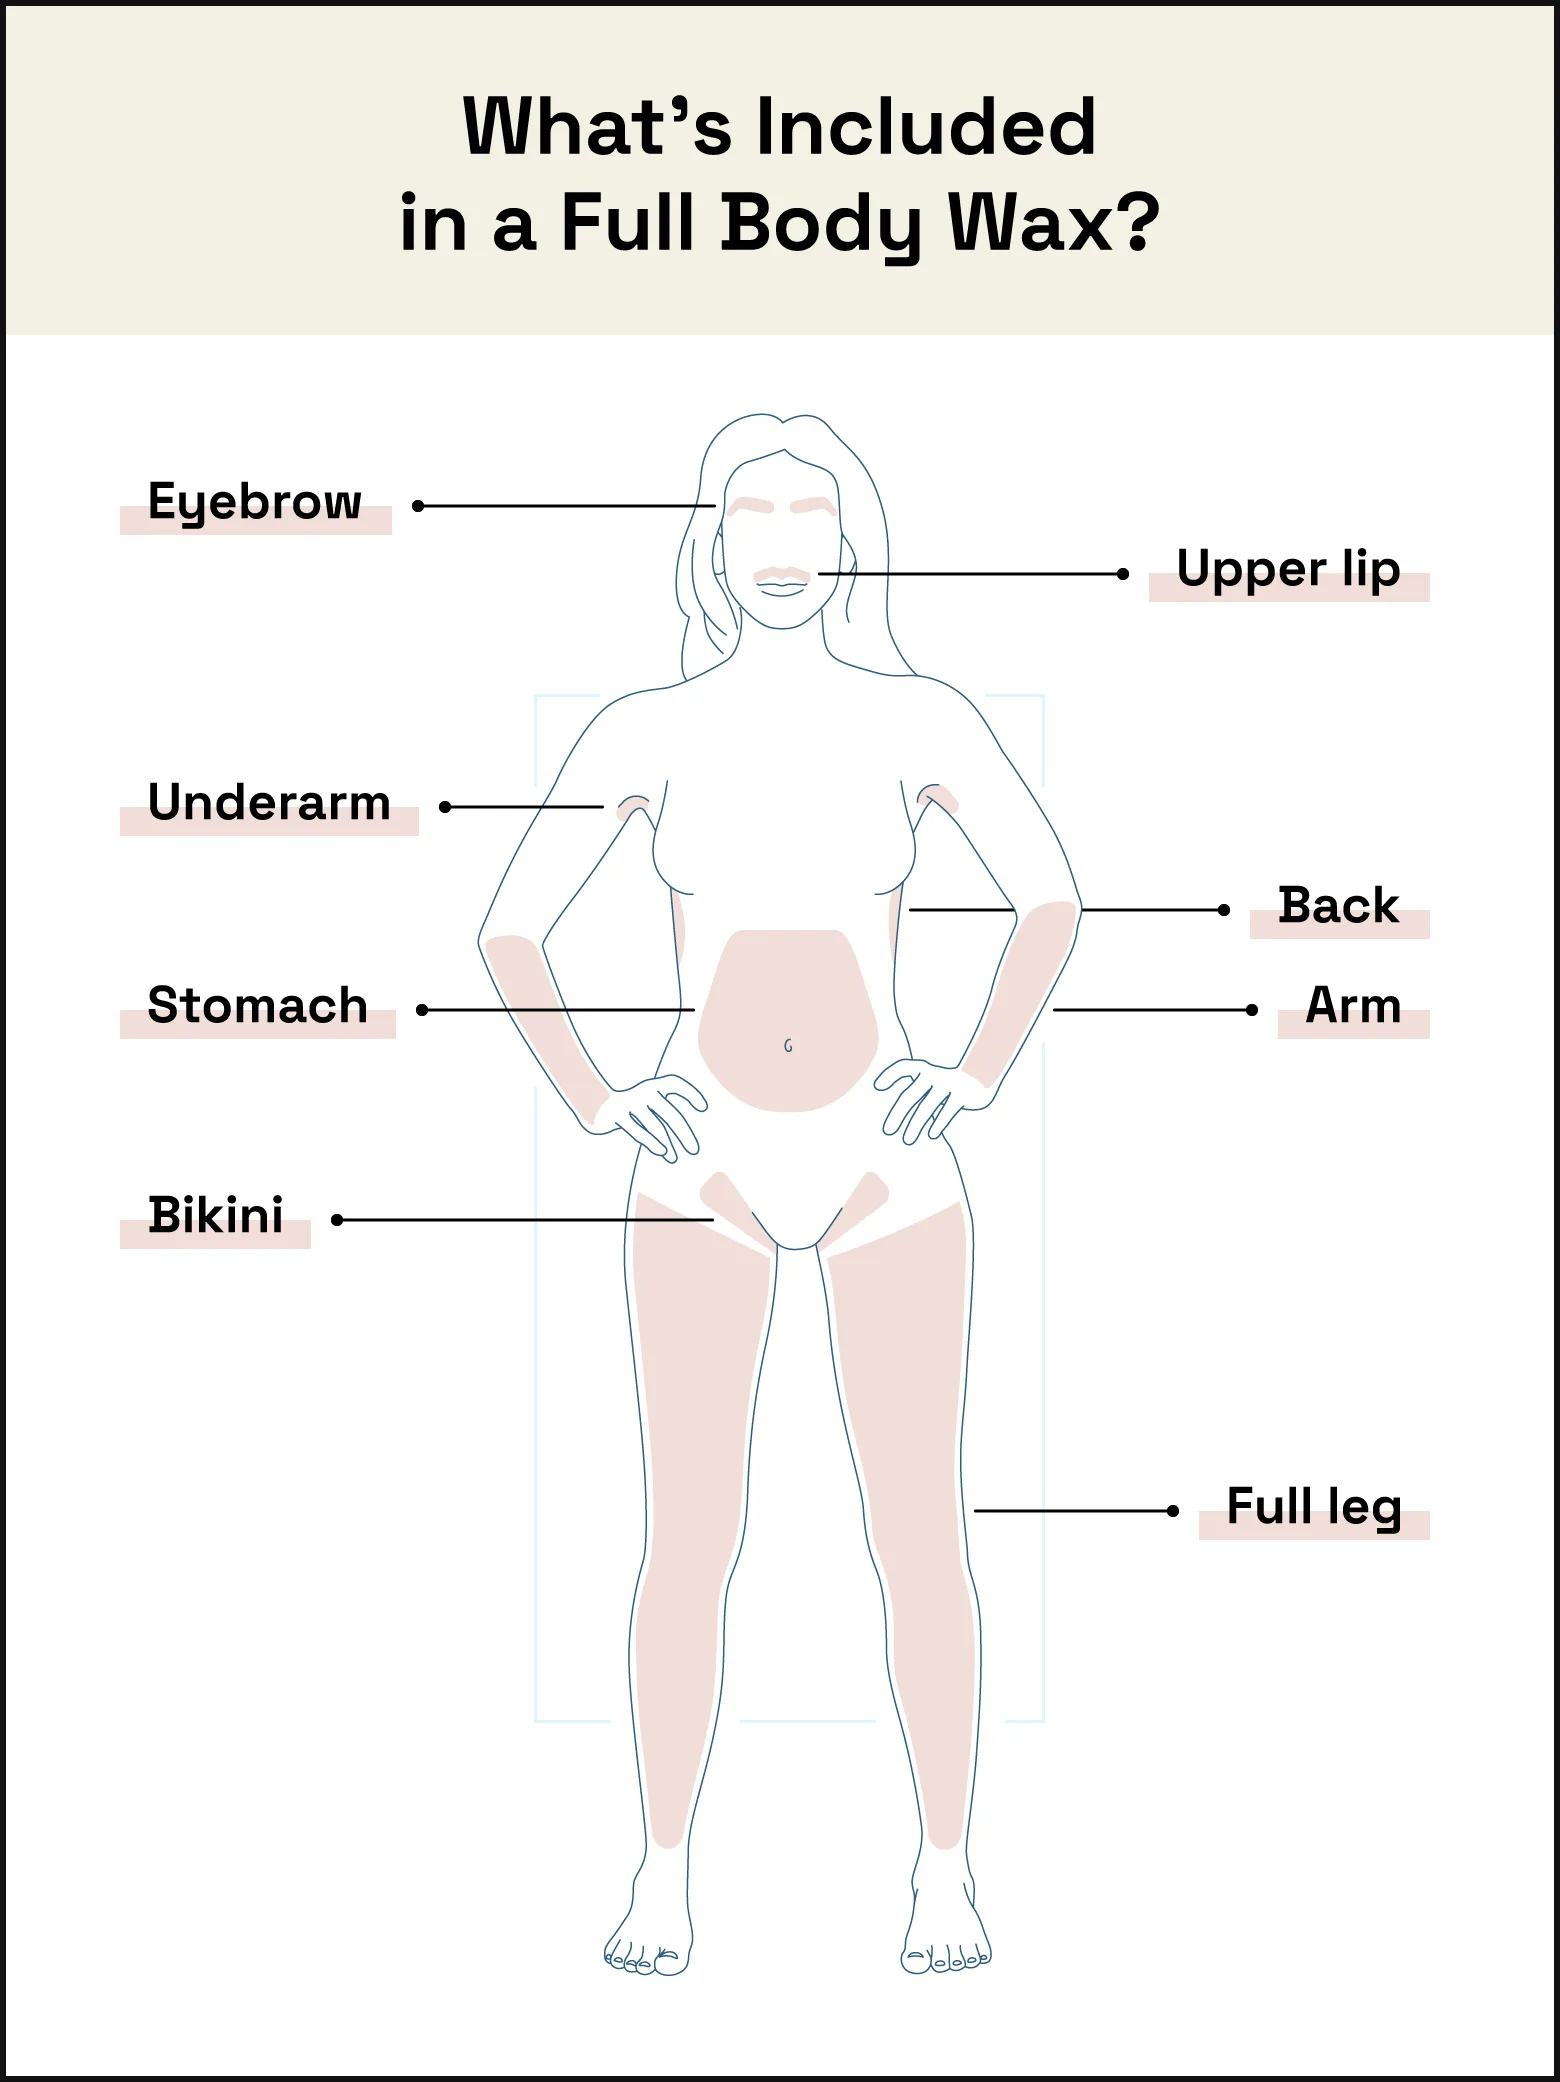 The typical full body wax includes an eyebrow, lip, underarm, arm, back, stomach, bikini or Brazilian, and leg wax.